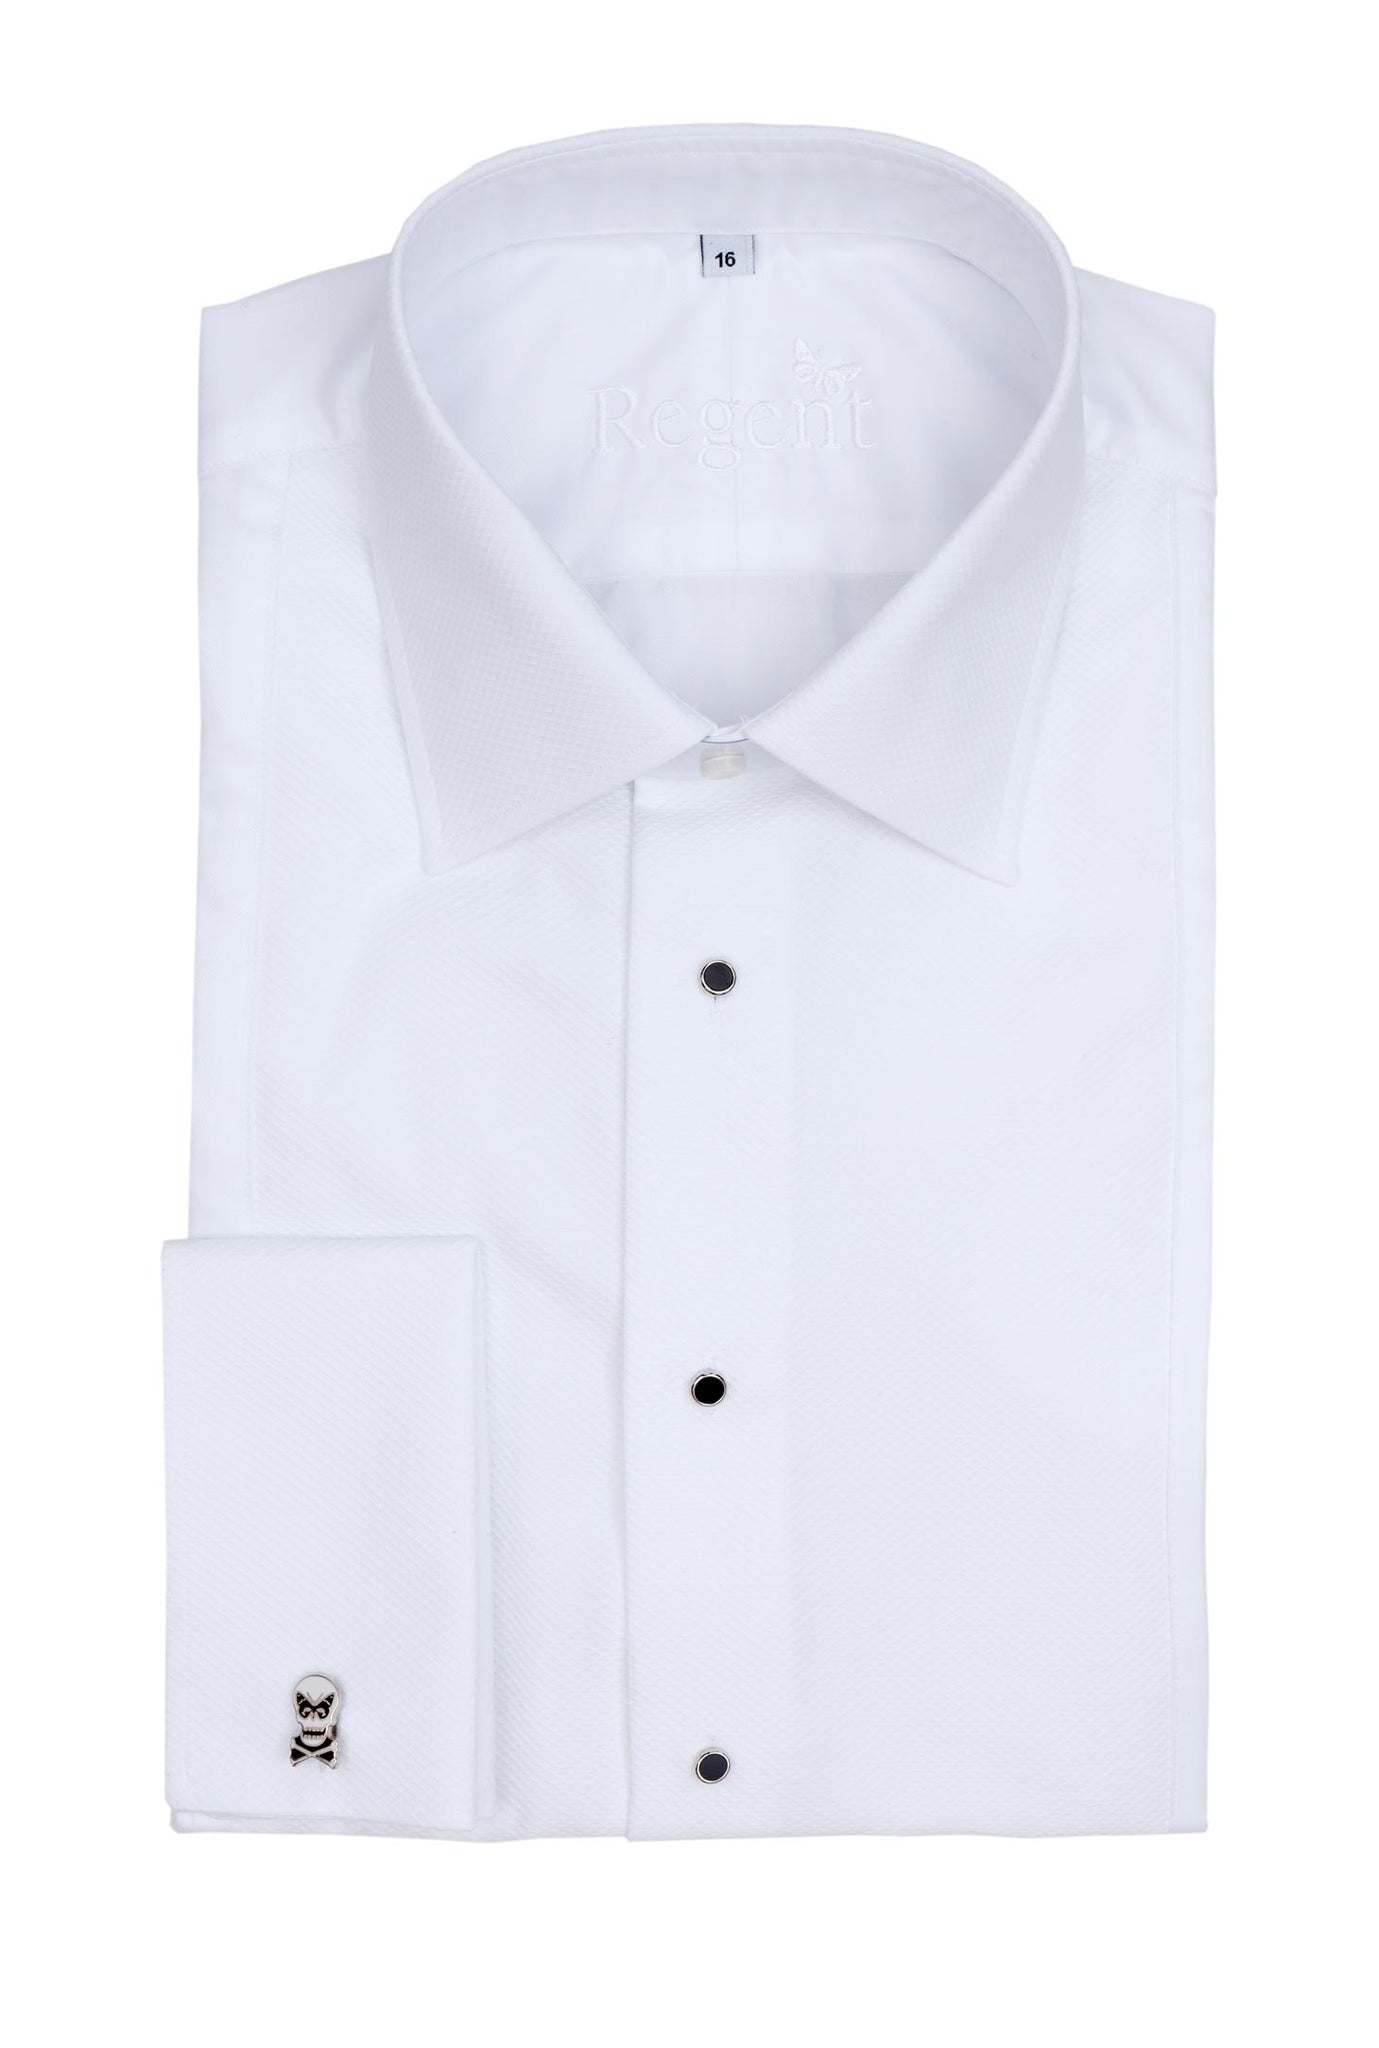 Regent - Dinner/ Evening Shirt - White Twill with Marcella Details - Regent Tailoring